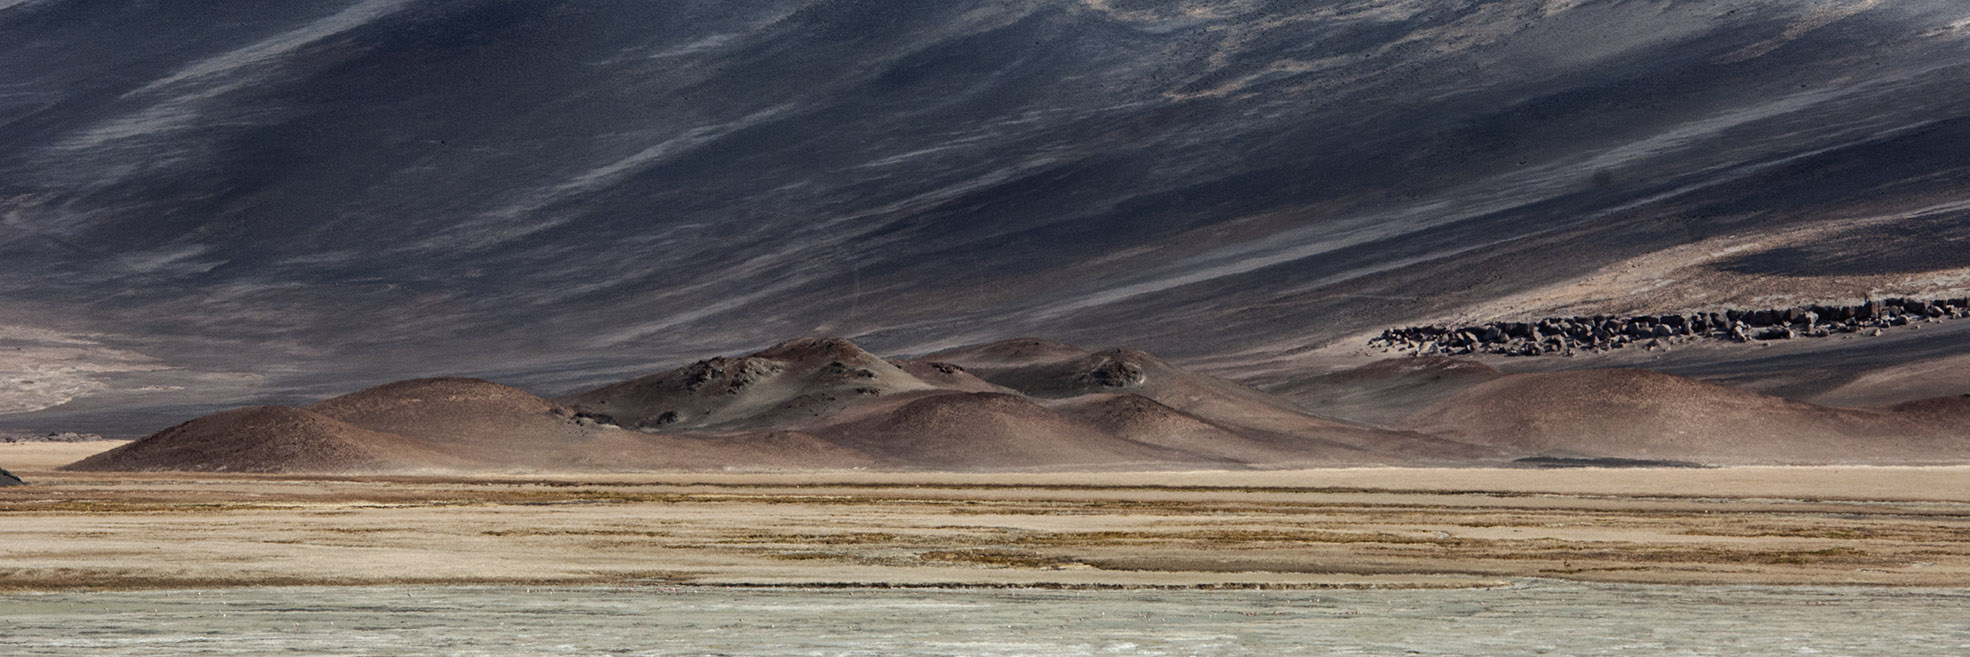 Panoramic image of Atacama Desert in Chile